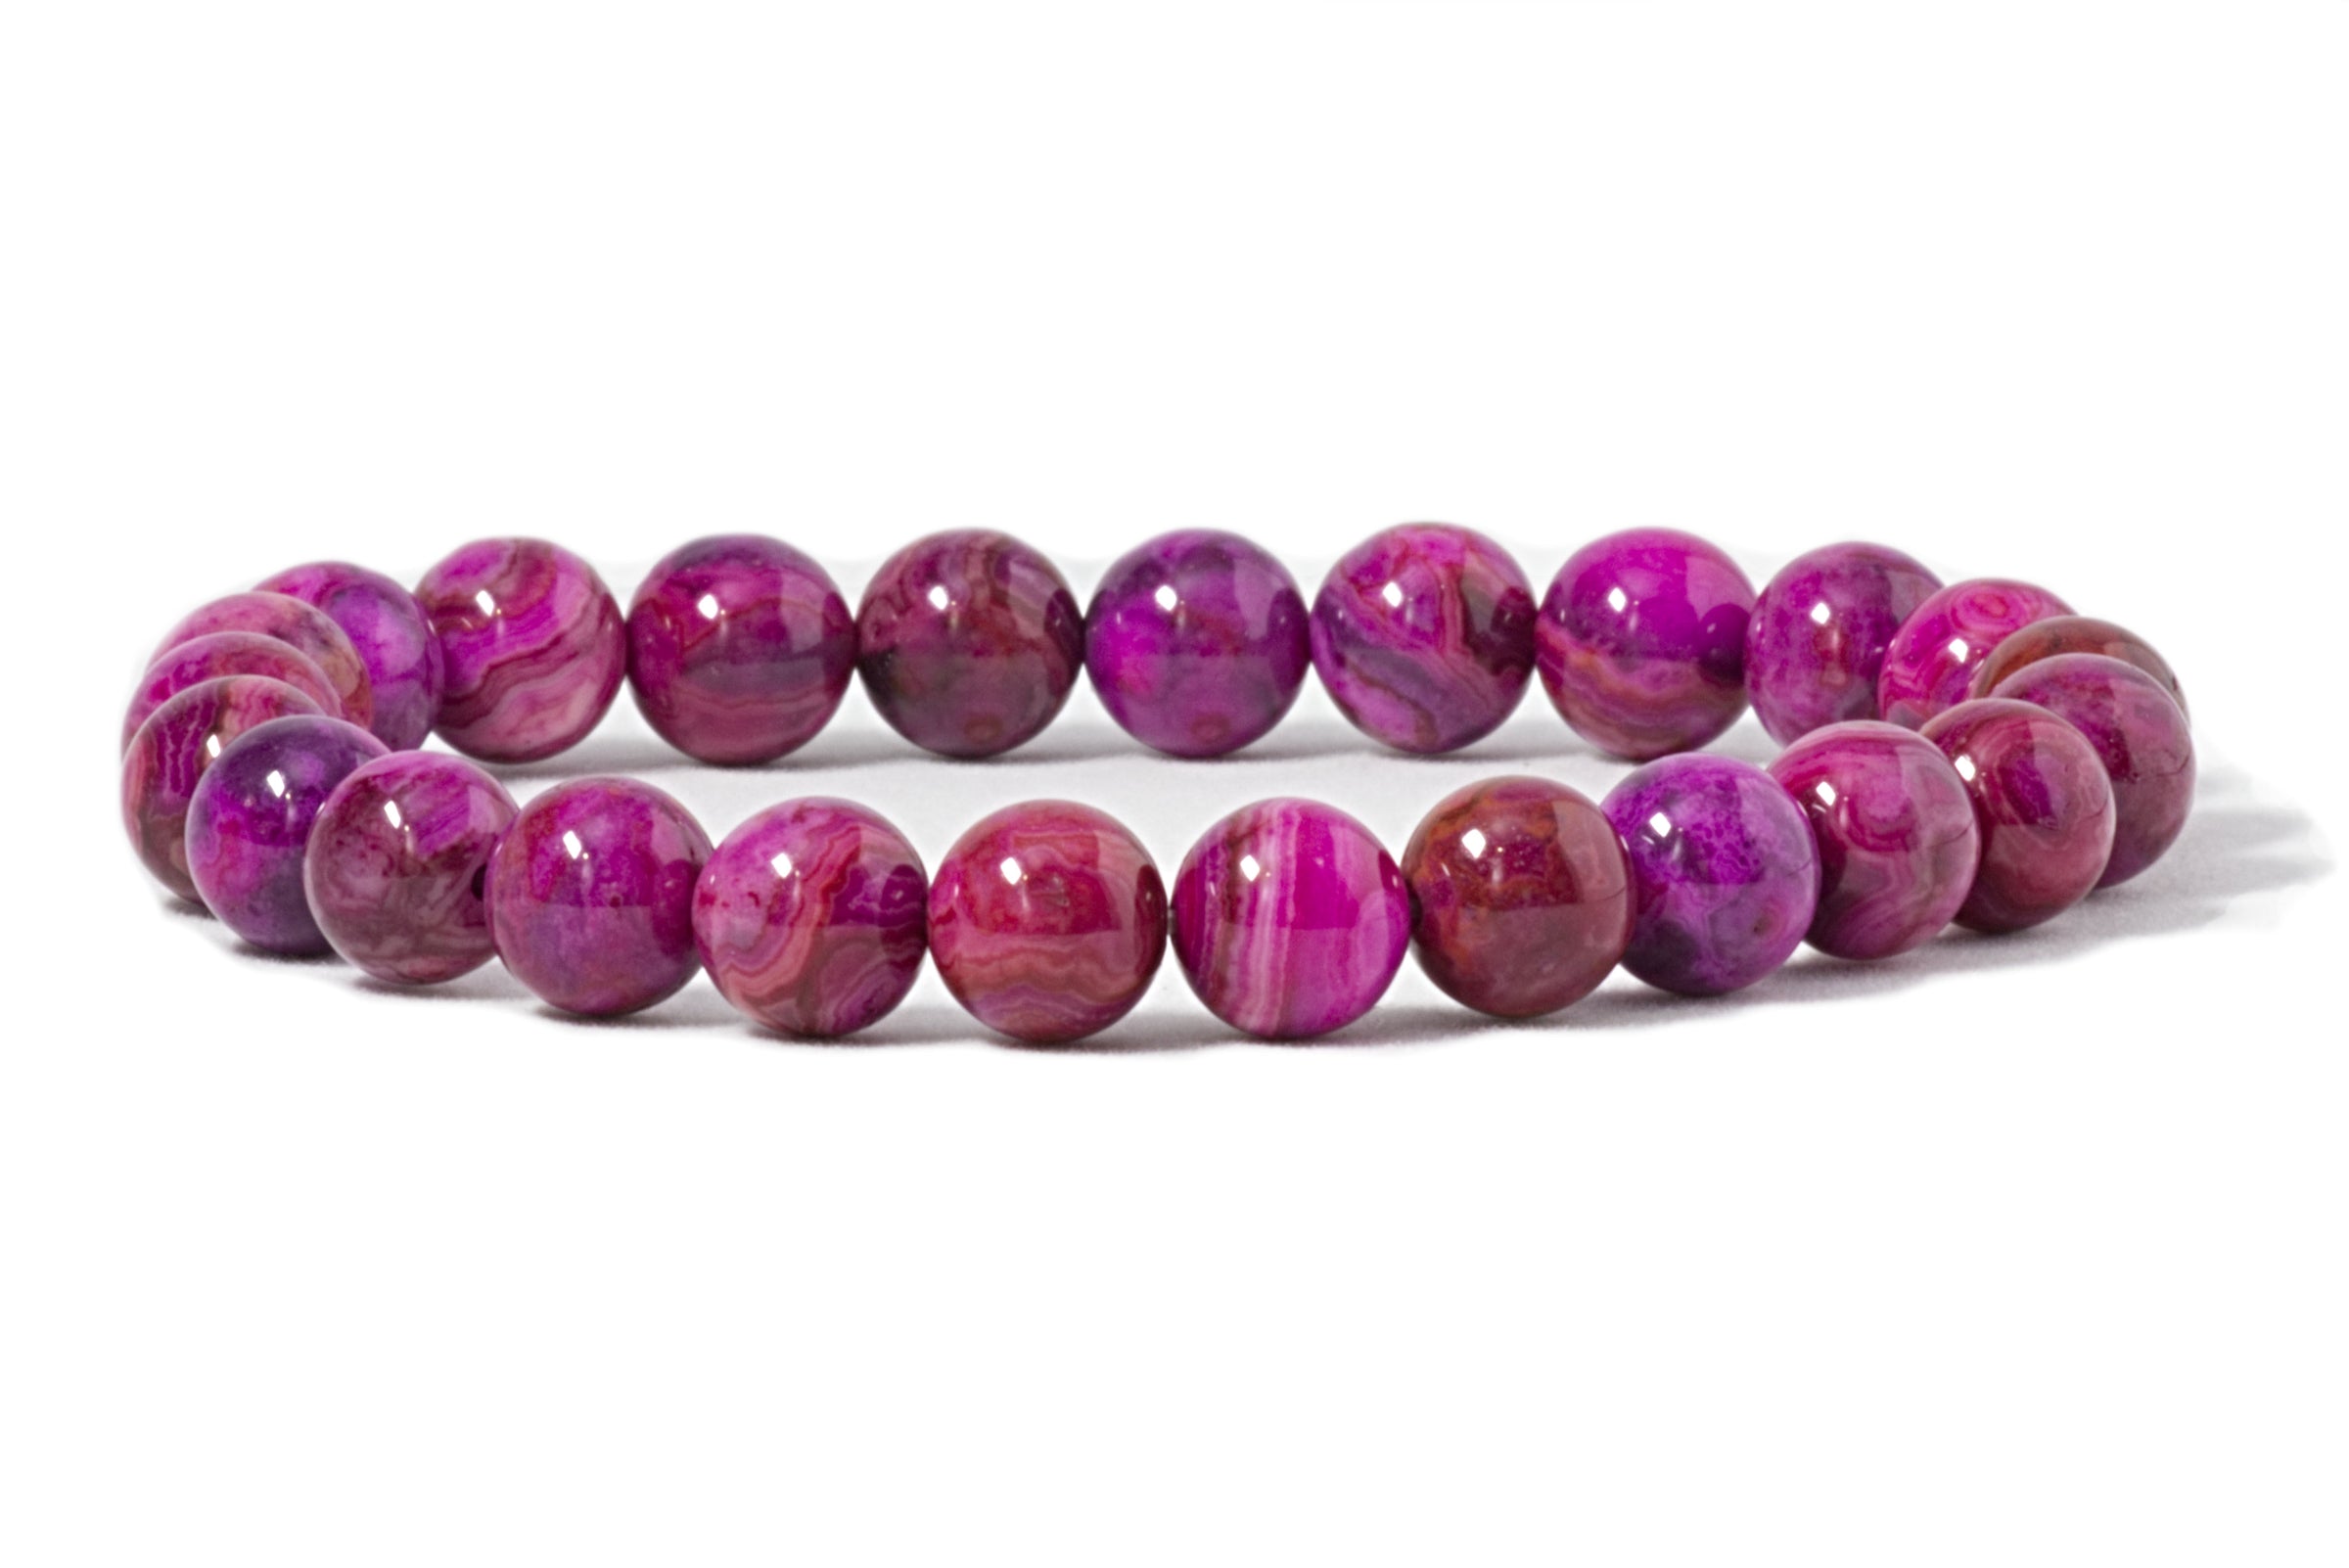 Stretch Bracelet | 8mm Beads (Pink Crazy Lace Agate)